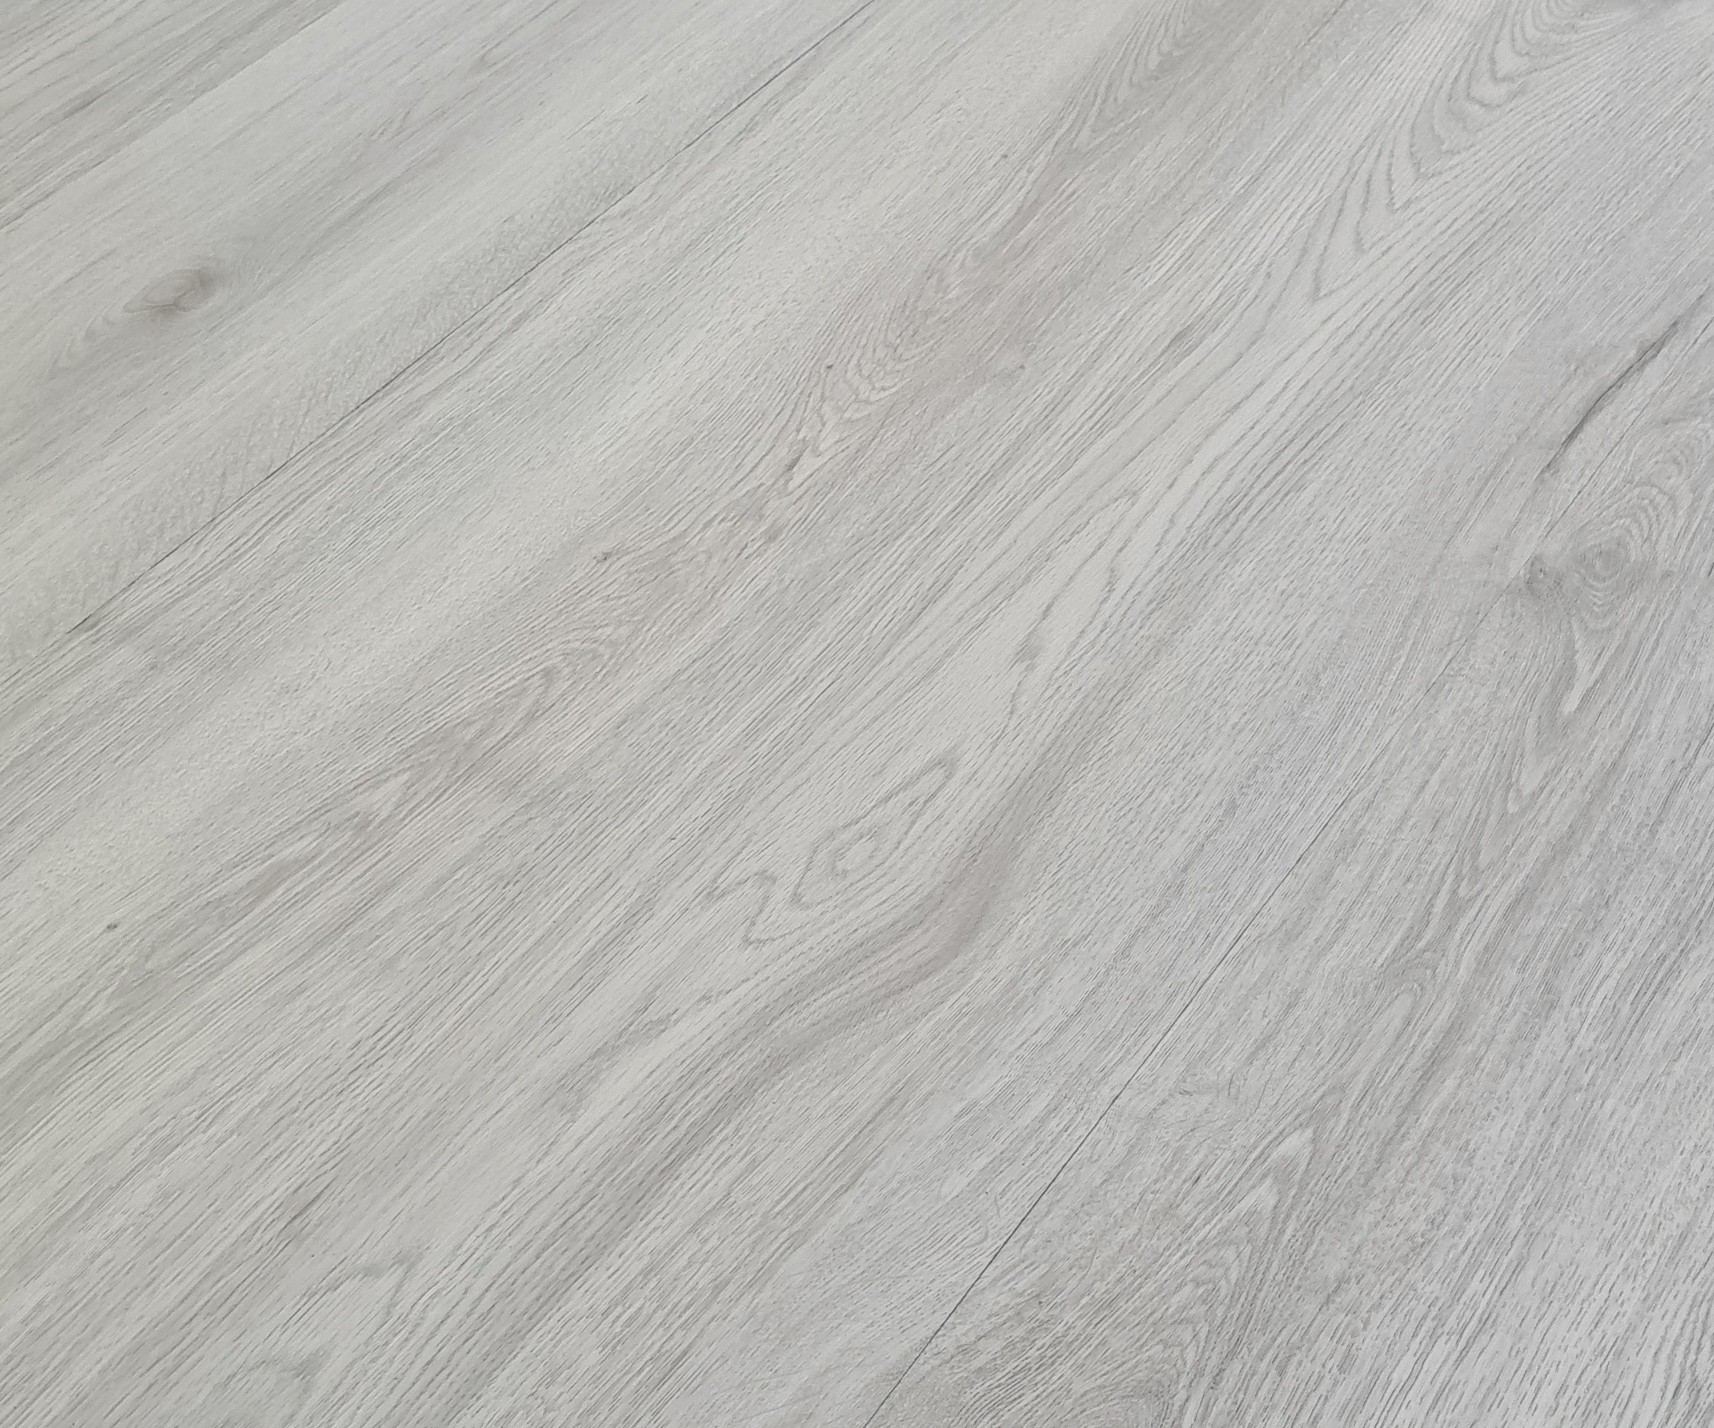 Podlaha vinylová zámková HDF Home XL karakum oak light grey